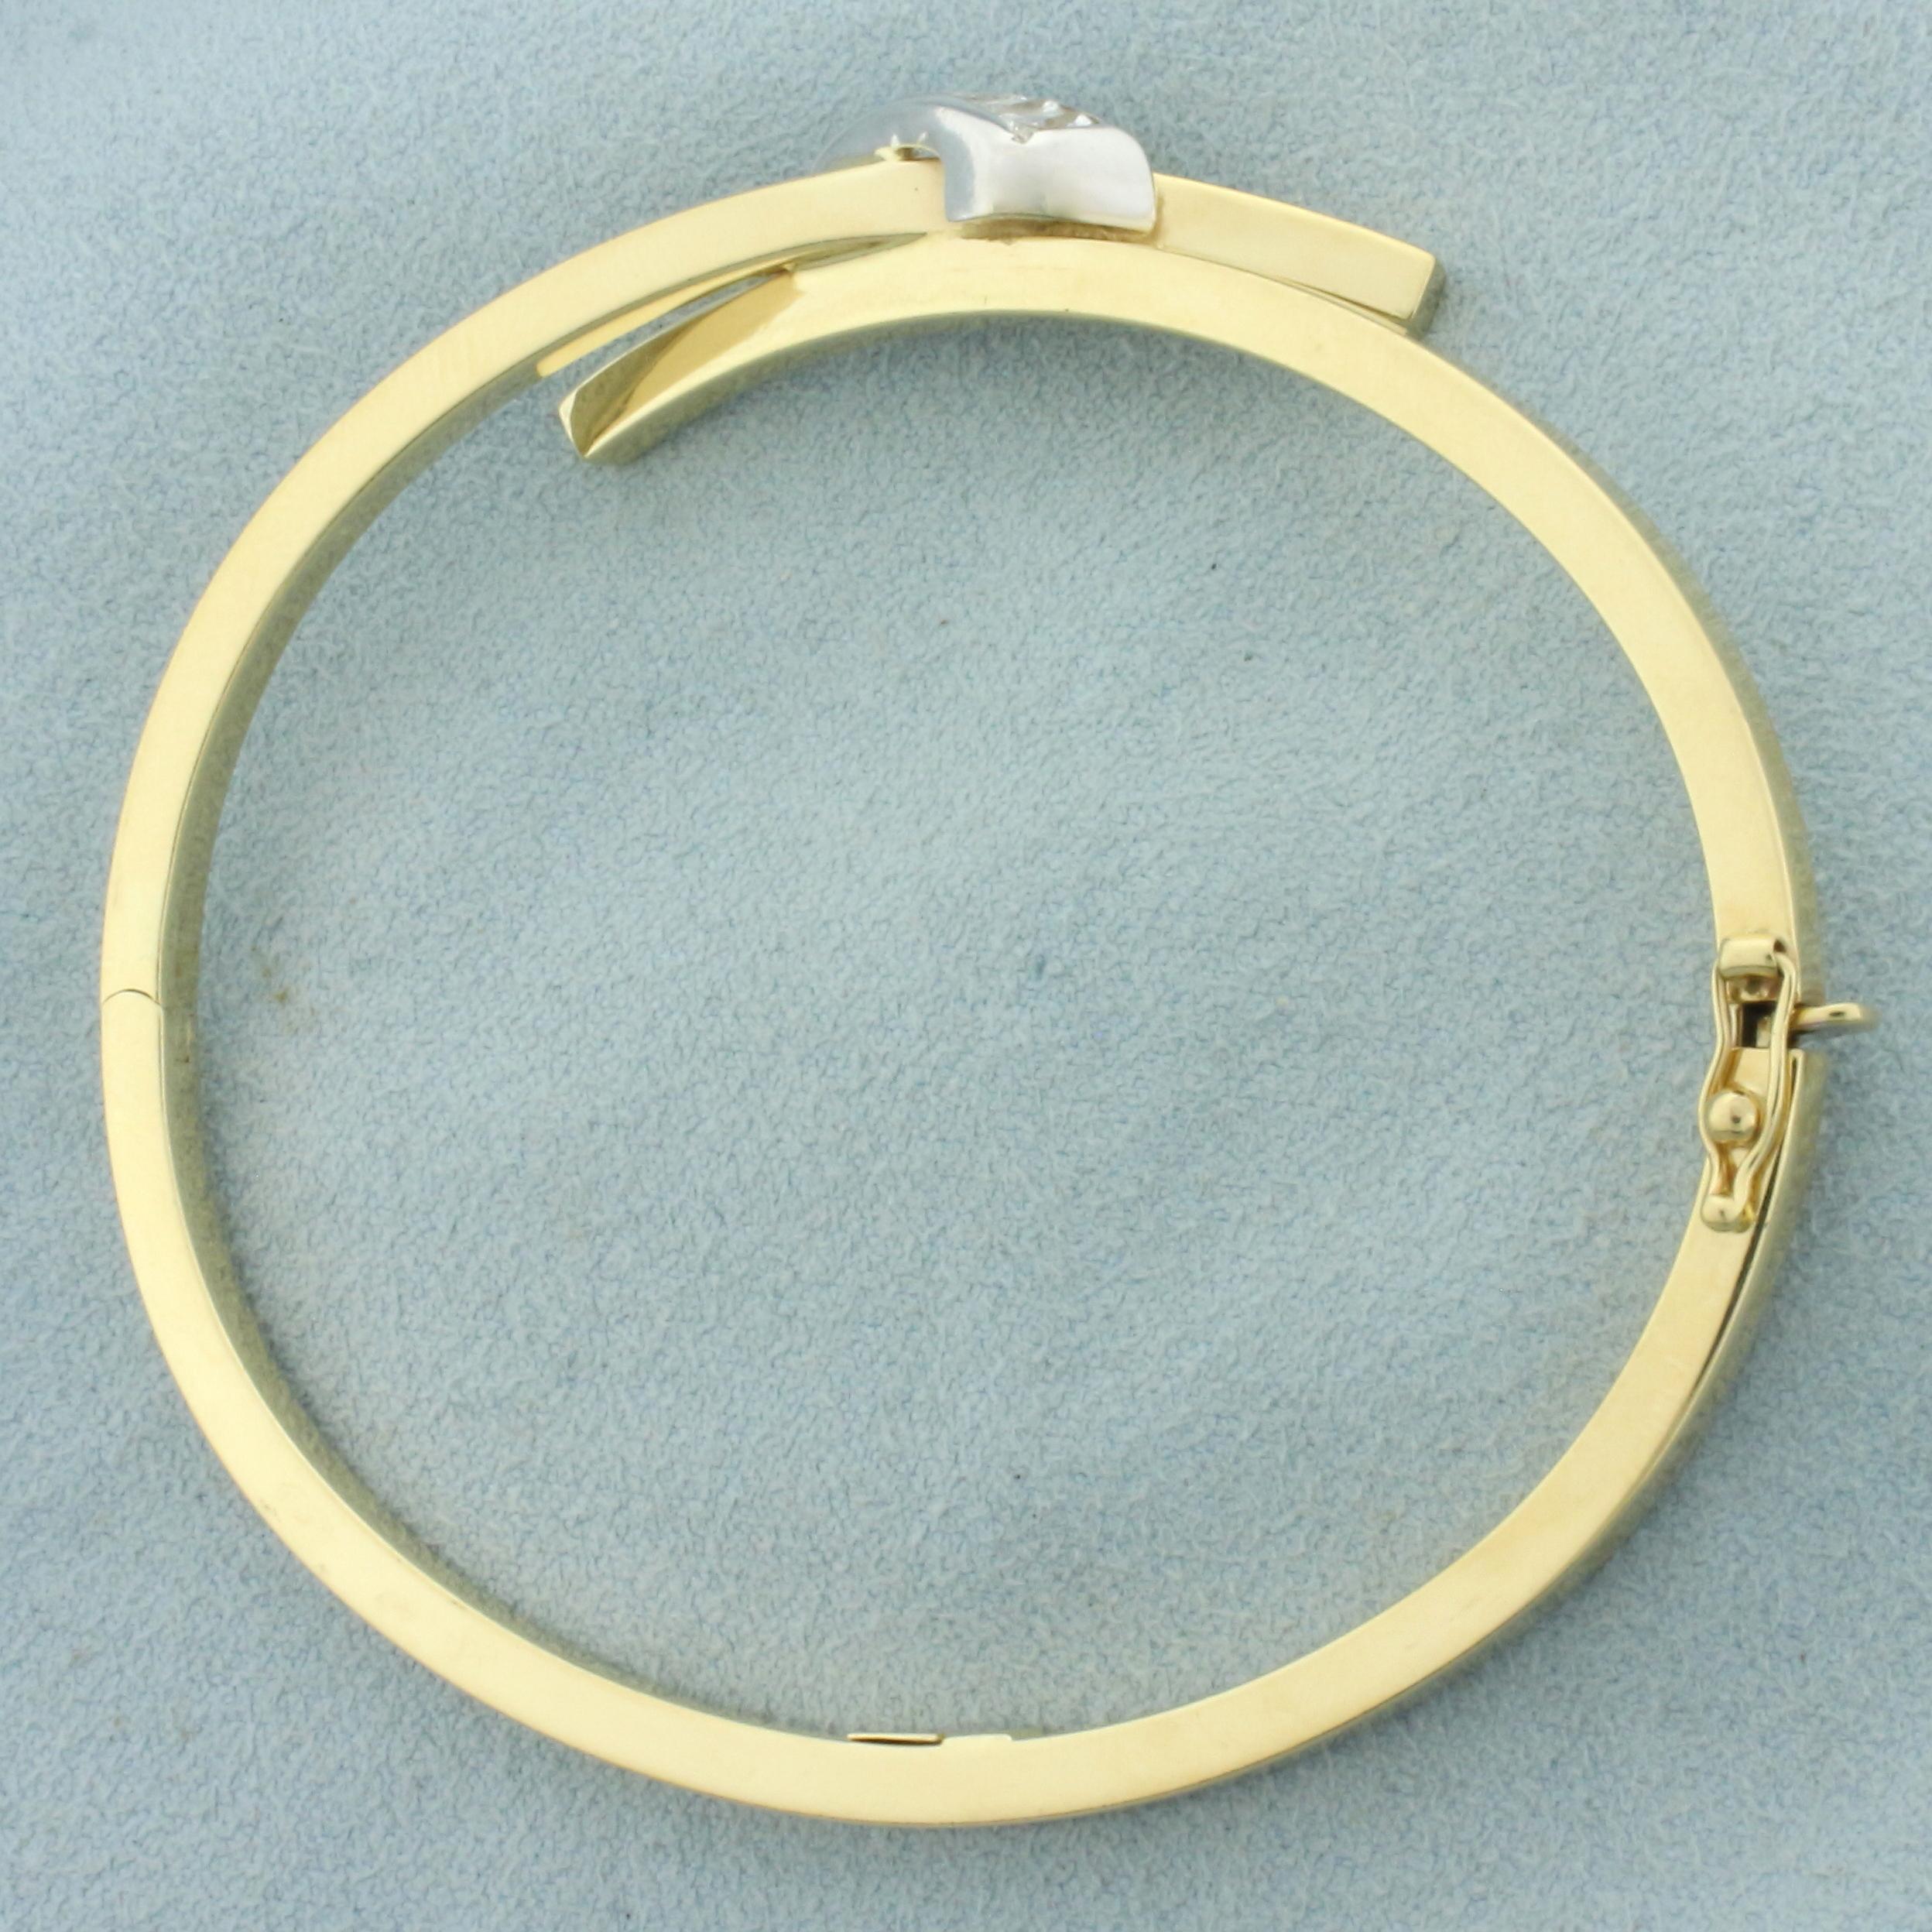 Criss Cross Hinged Bangle Bracelet In 14k Yellow Gold